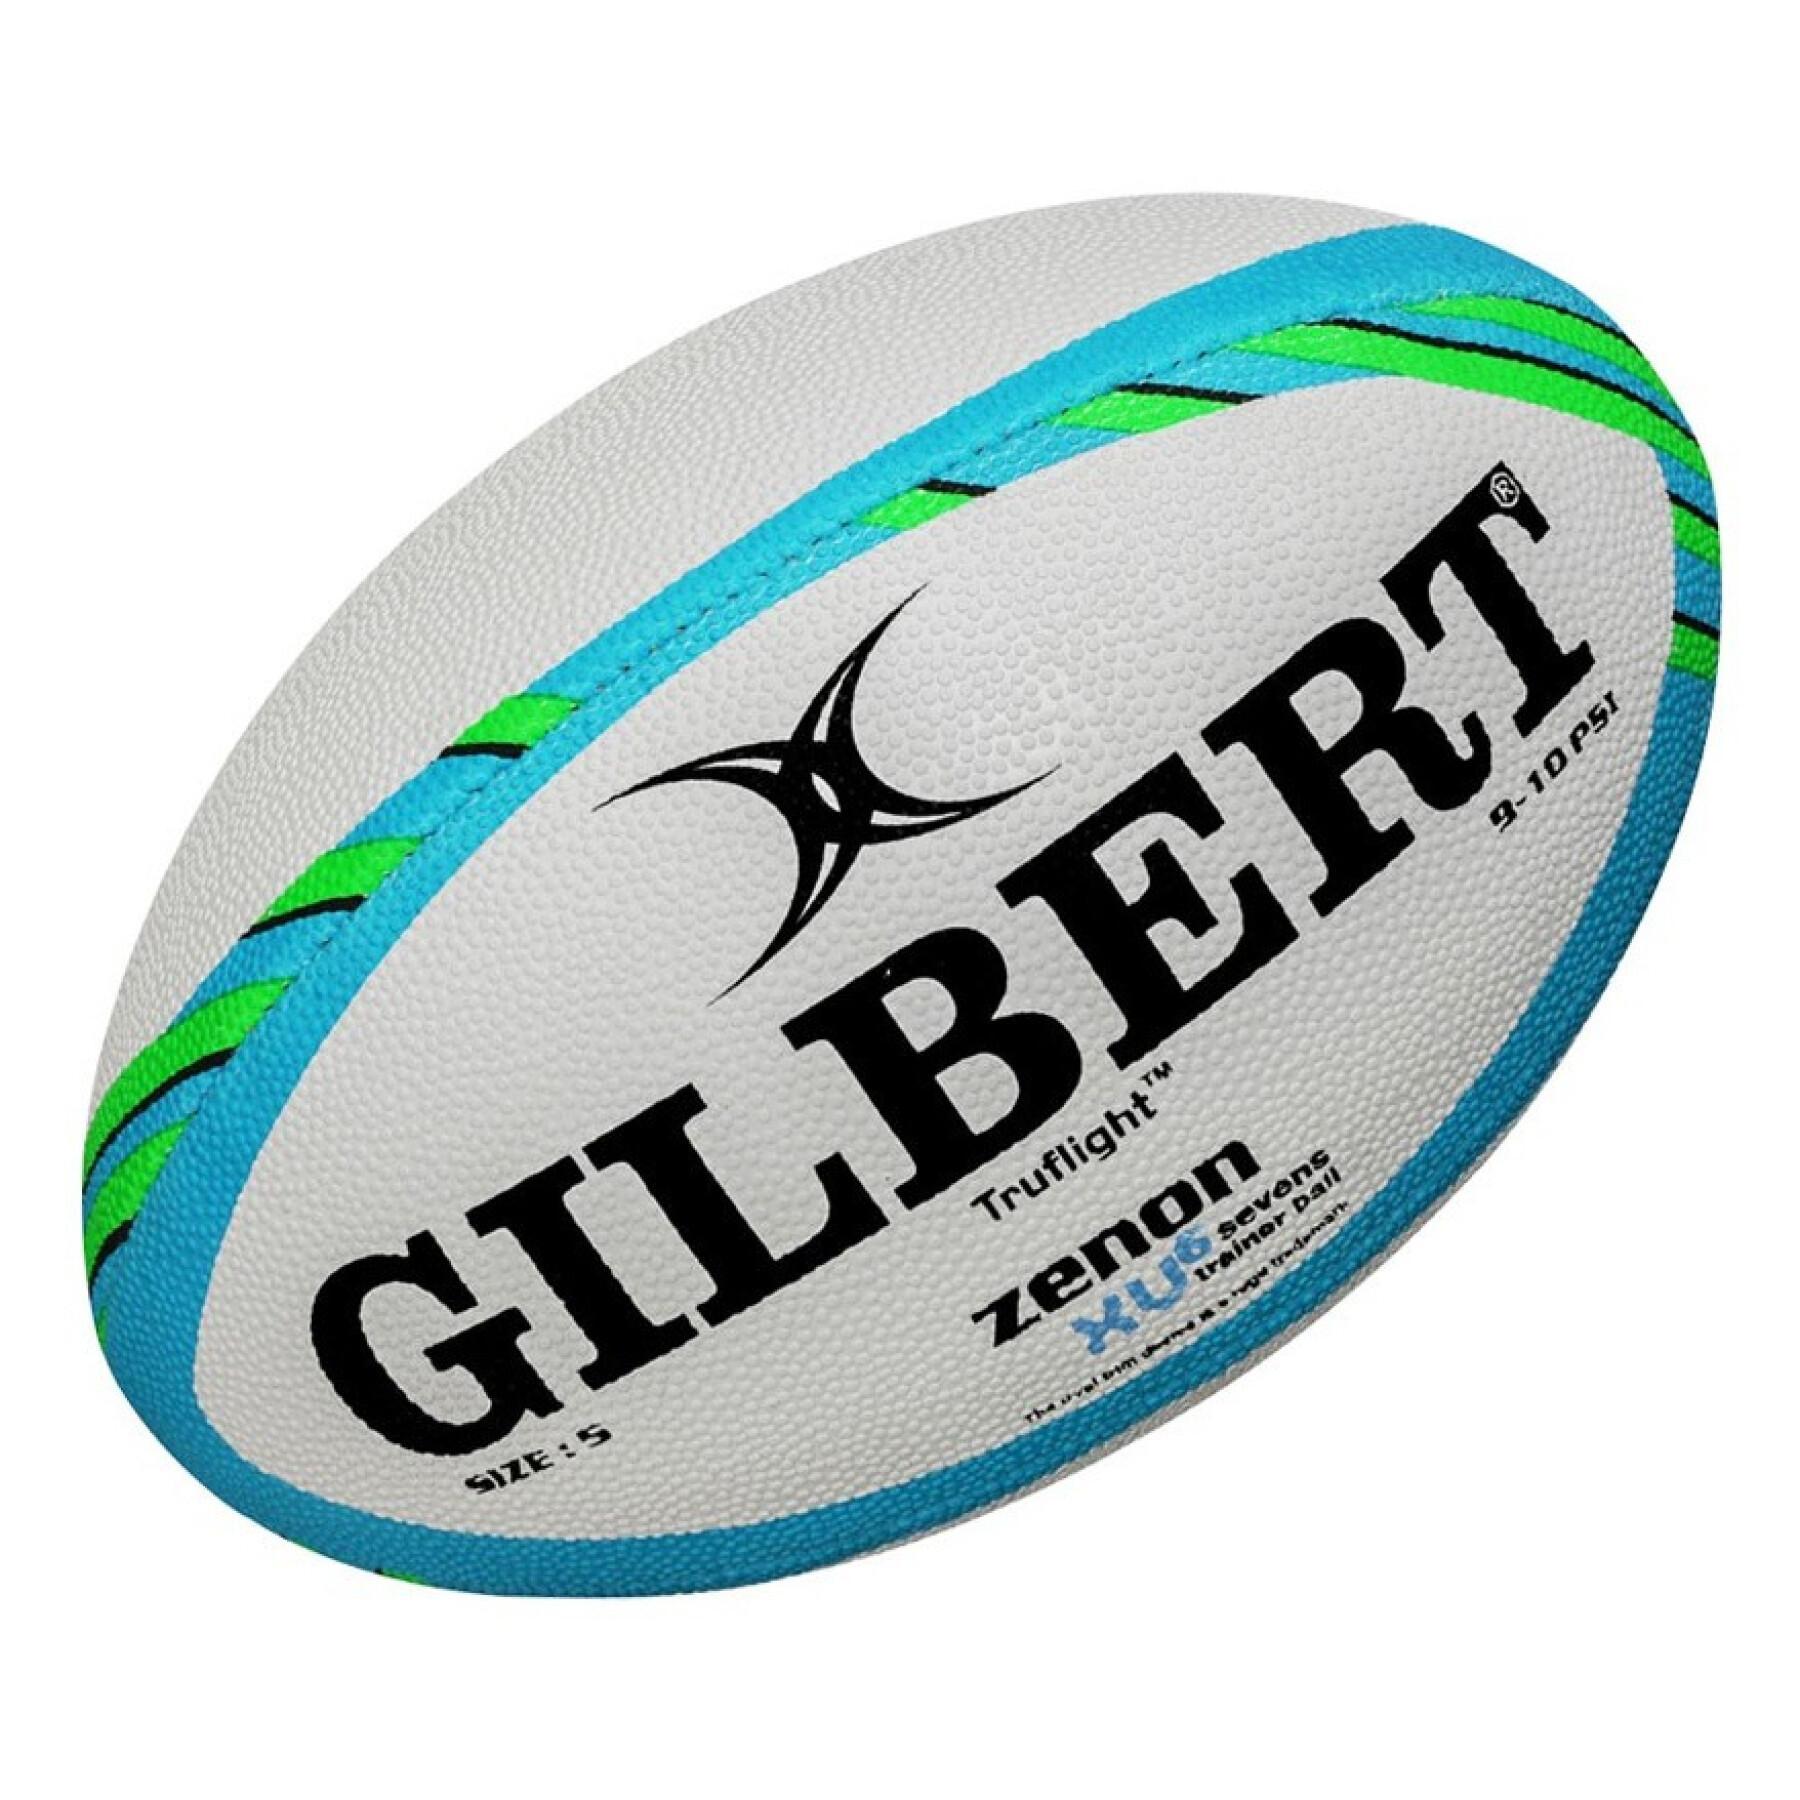 Gilbert Zenon Ballon dentrainement de Rugby 